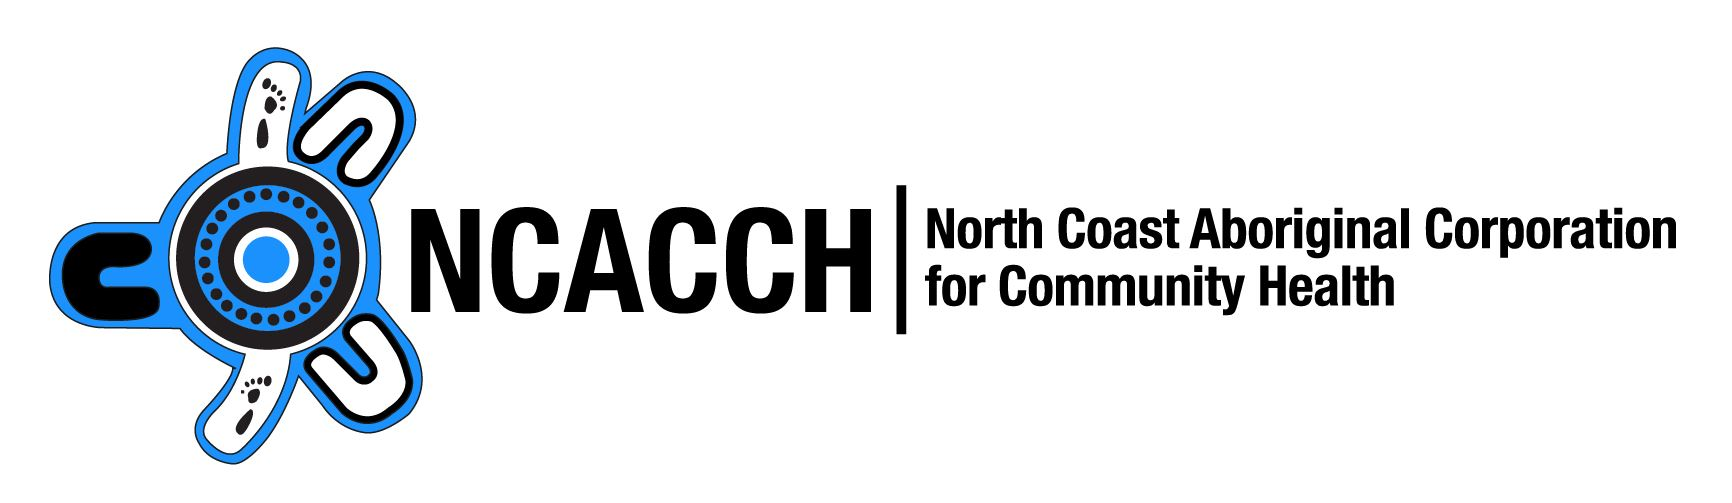 North Coast Aboriginal Corporation for Community Health (NCACCH) Logo